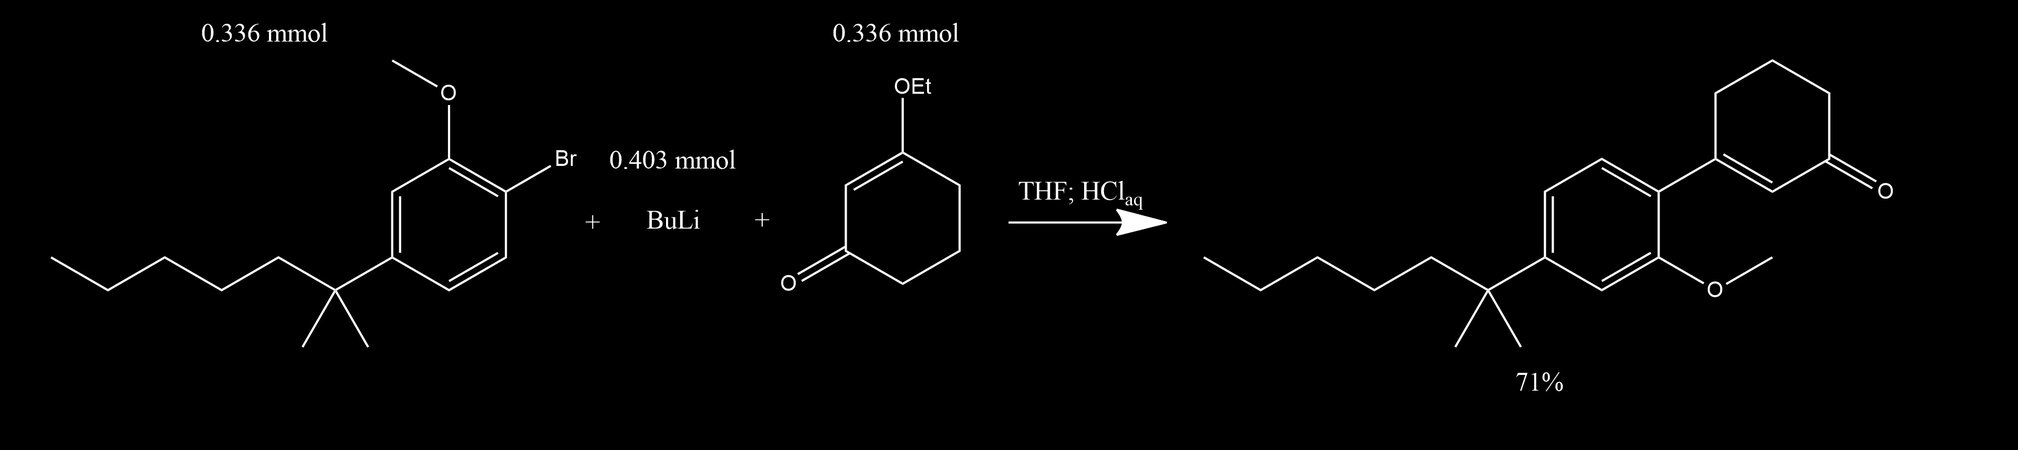 Synthesis of СР-47,497 3-2-Methoxy-4-1,1-dimethylhexyl phenyl cyclohex-2-en-1-one.jpg